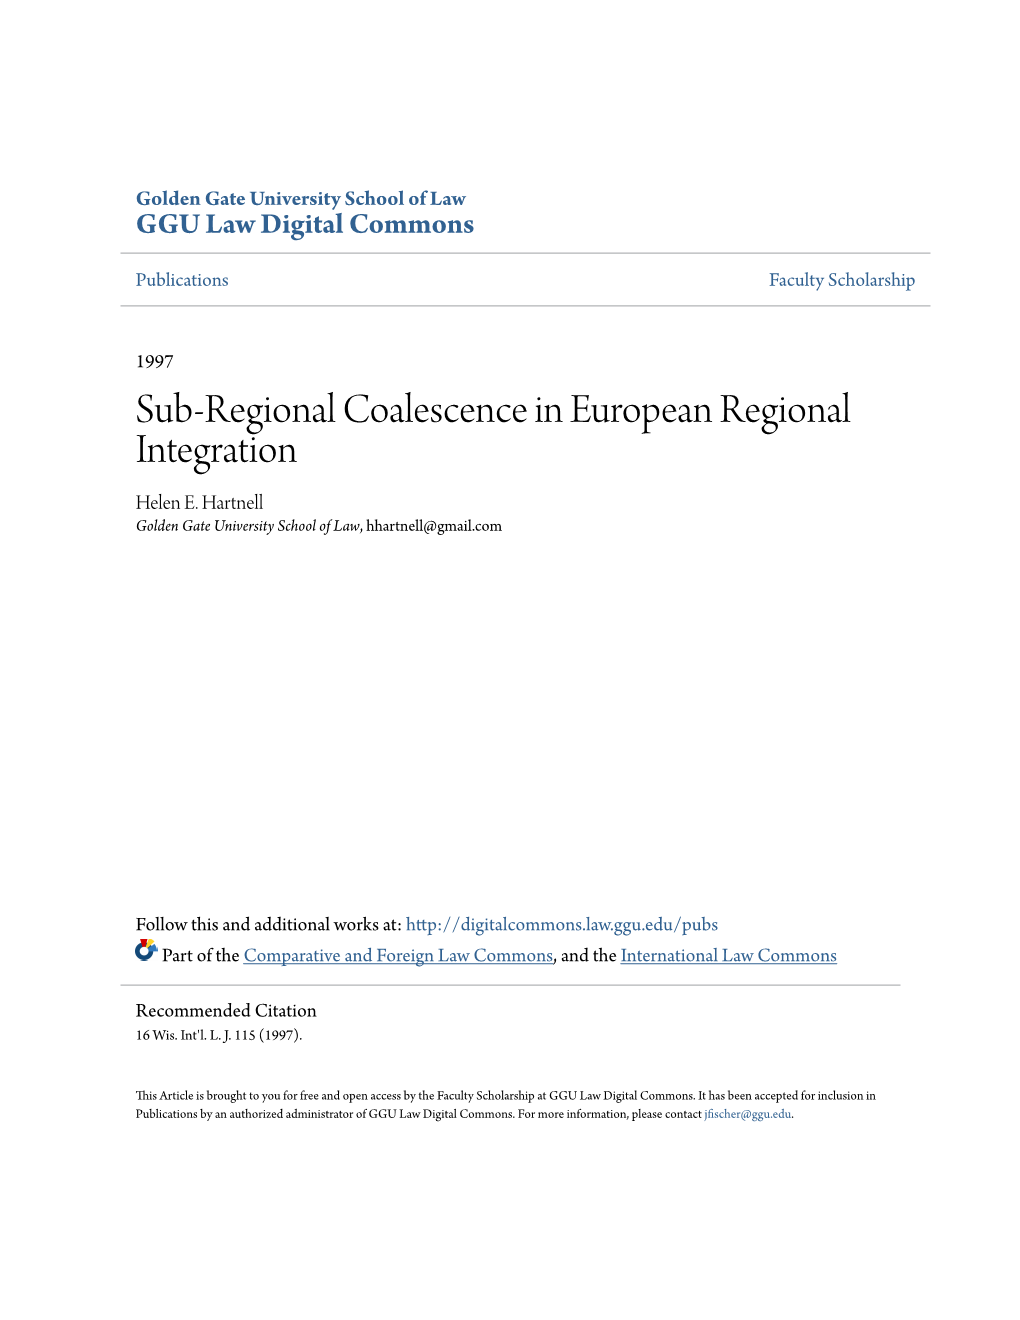 Sub-Regional Coalescence in European Regional Integration Helen E